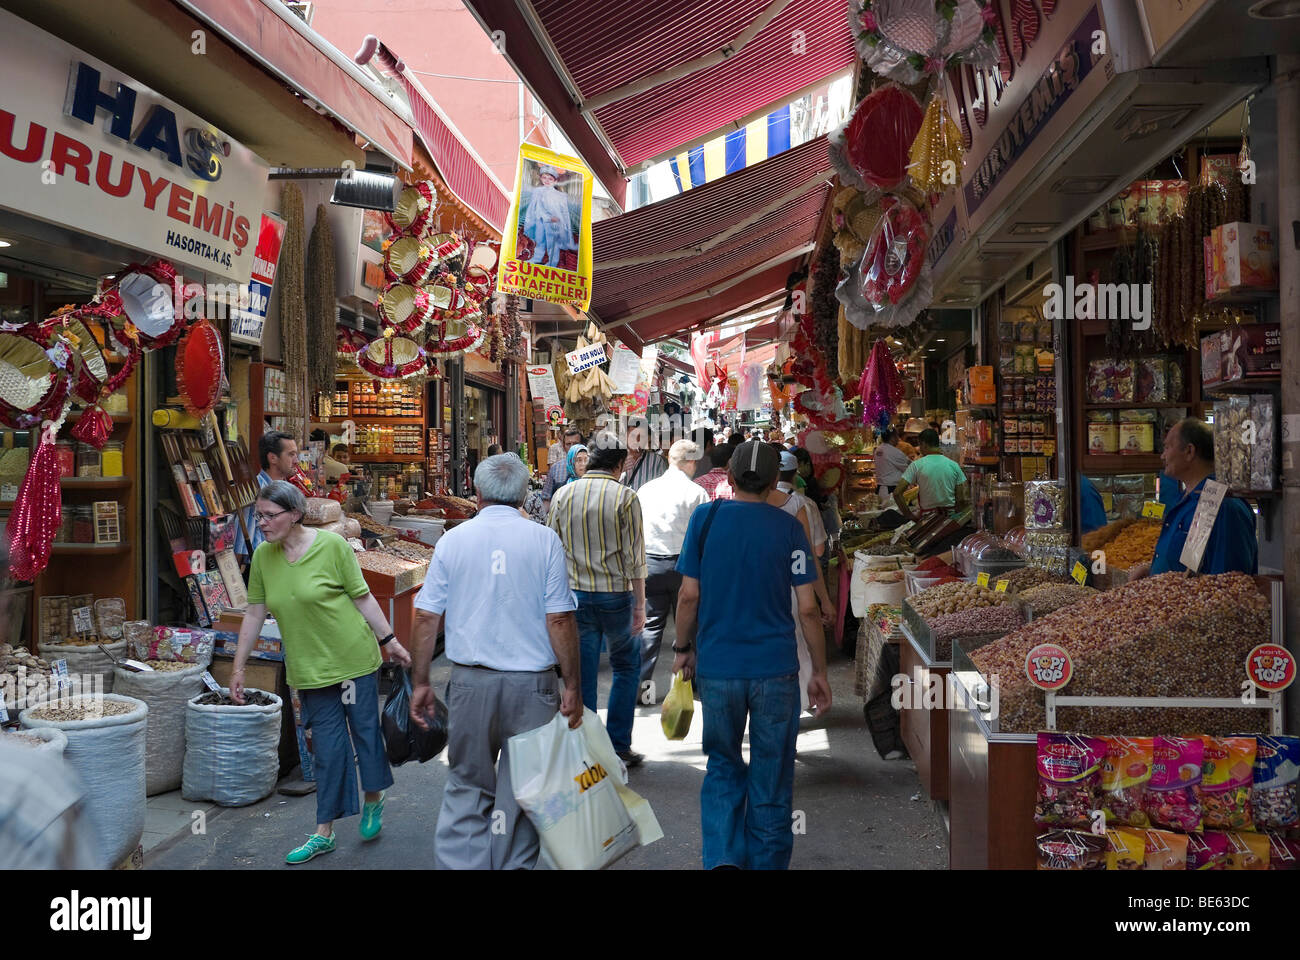 Venditori ambulanti, mercato, Grand Bazaar, Kapali Carsi, Istanbul, Turchia, Europa, Asia Foto Stock